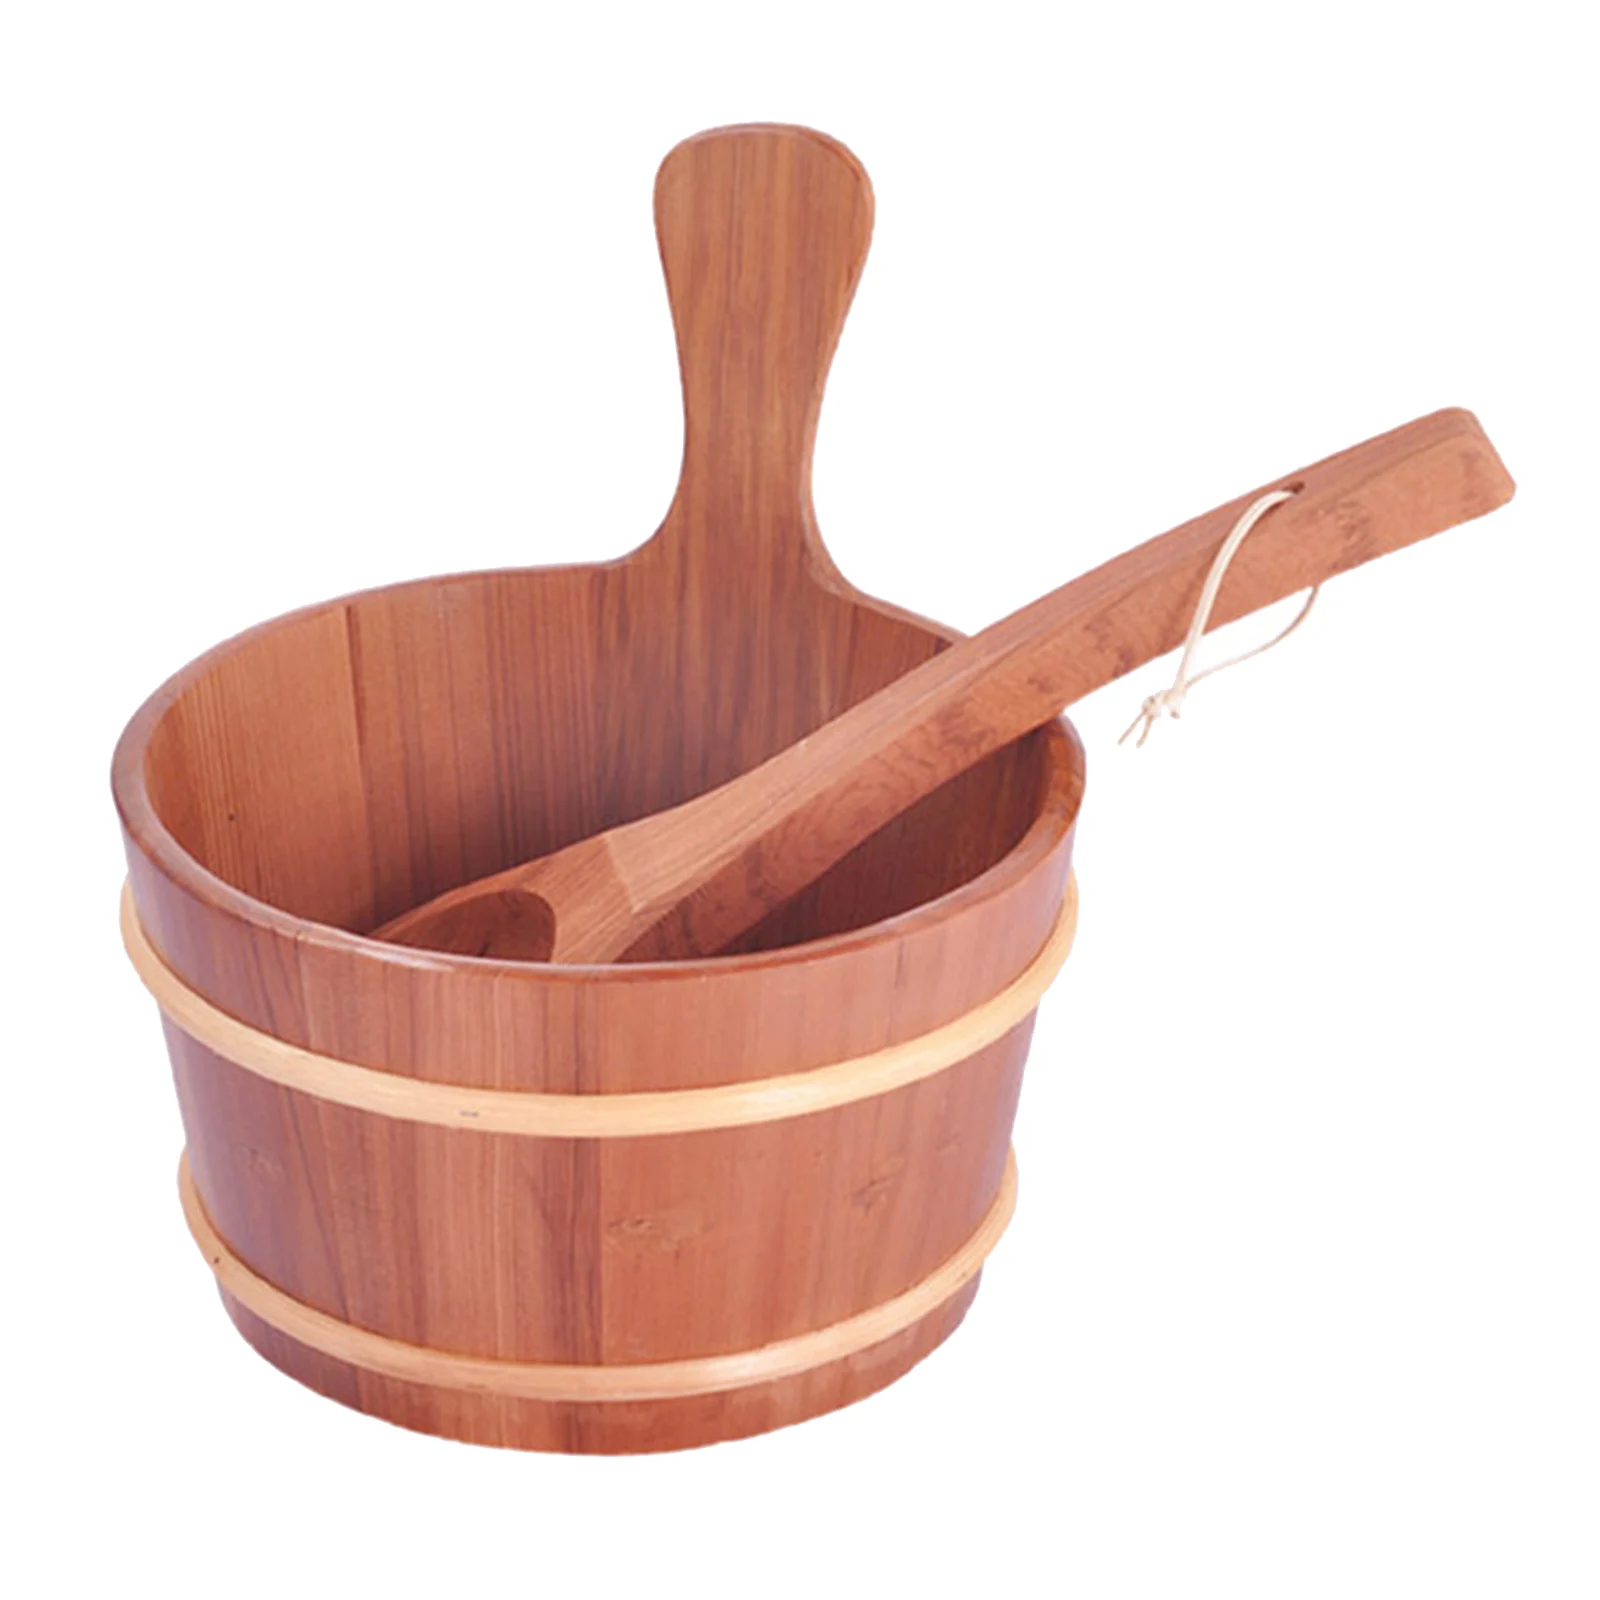 Bathroom Natural Wooden Bucket+Ladle Set For Sauna Spa Bathroom Accesso Q7F4 1X 